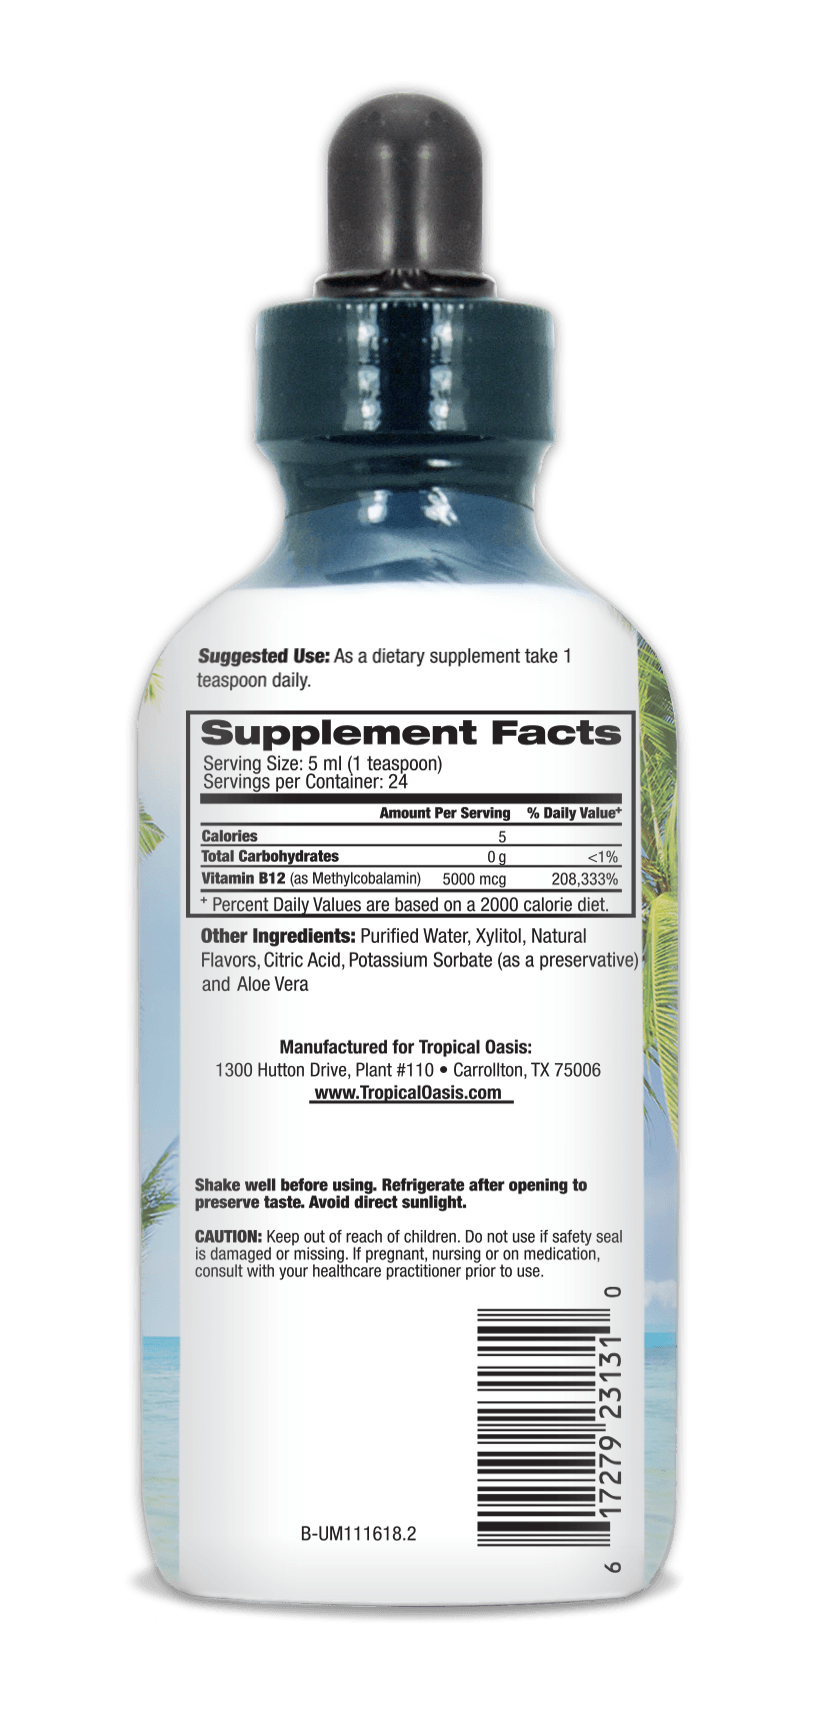 Ultra Max Methyl B12 Liquid Vitamins